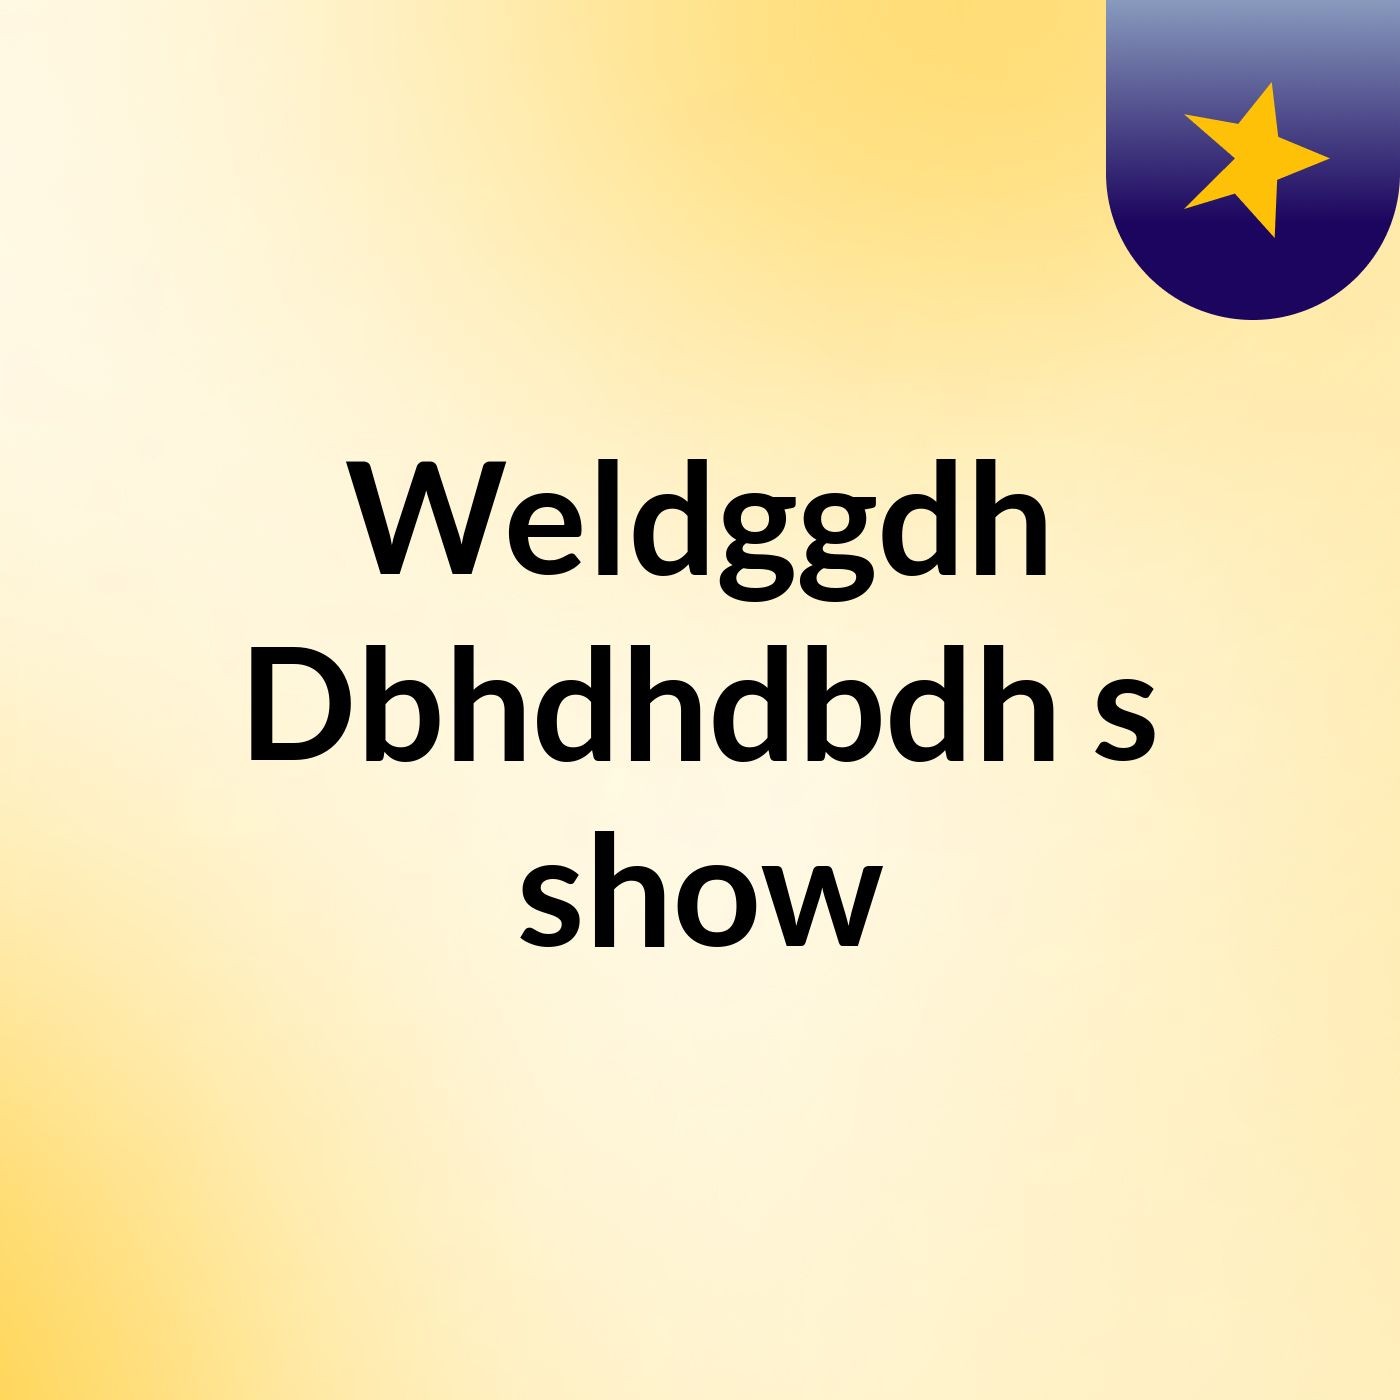 Weldggdh Dbhdhdbdh's show